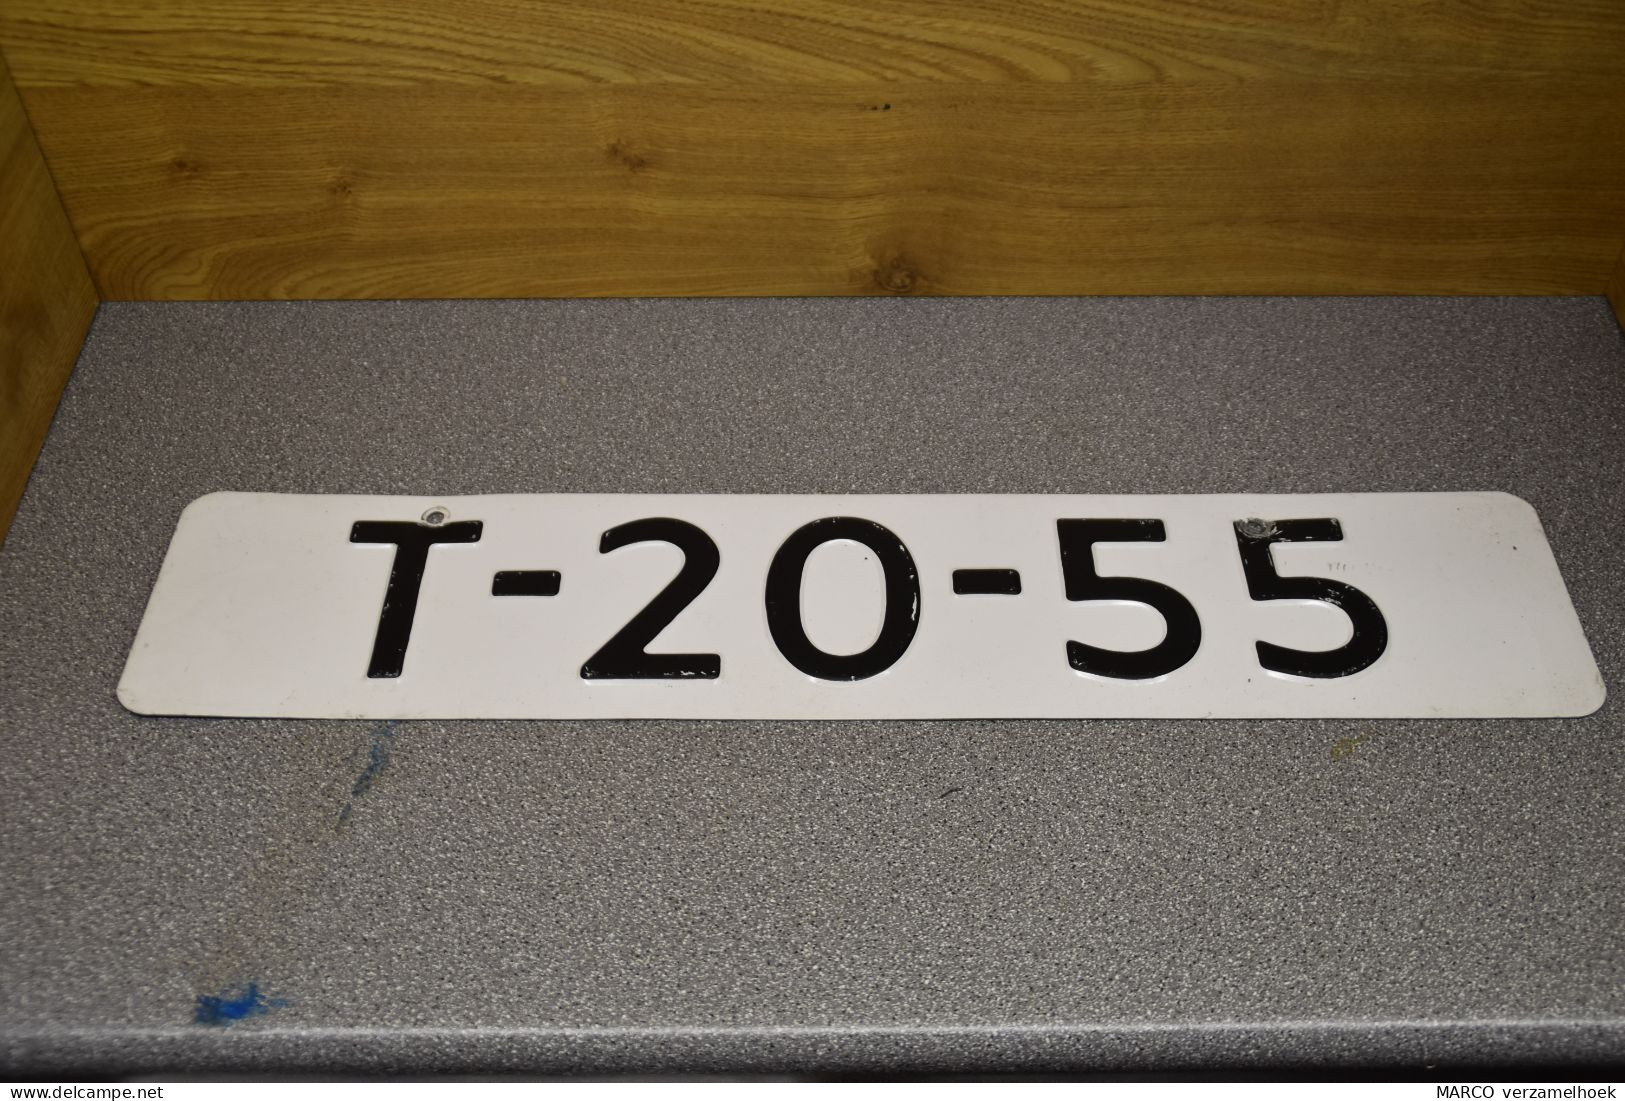 License Plate-nummerplaat-Nummernschild Nederland NL Tijdelijke Plaat Noord Brabant Oud-old - Number Plates